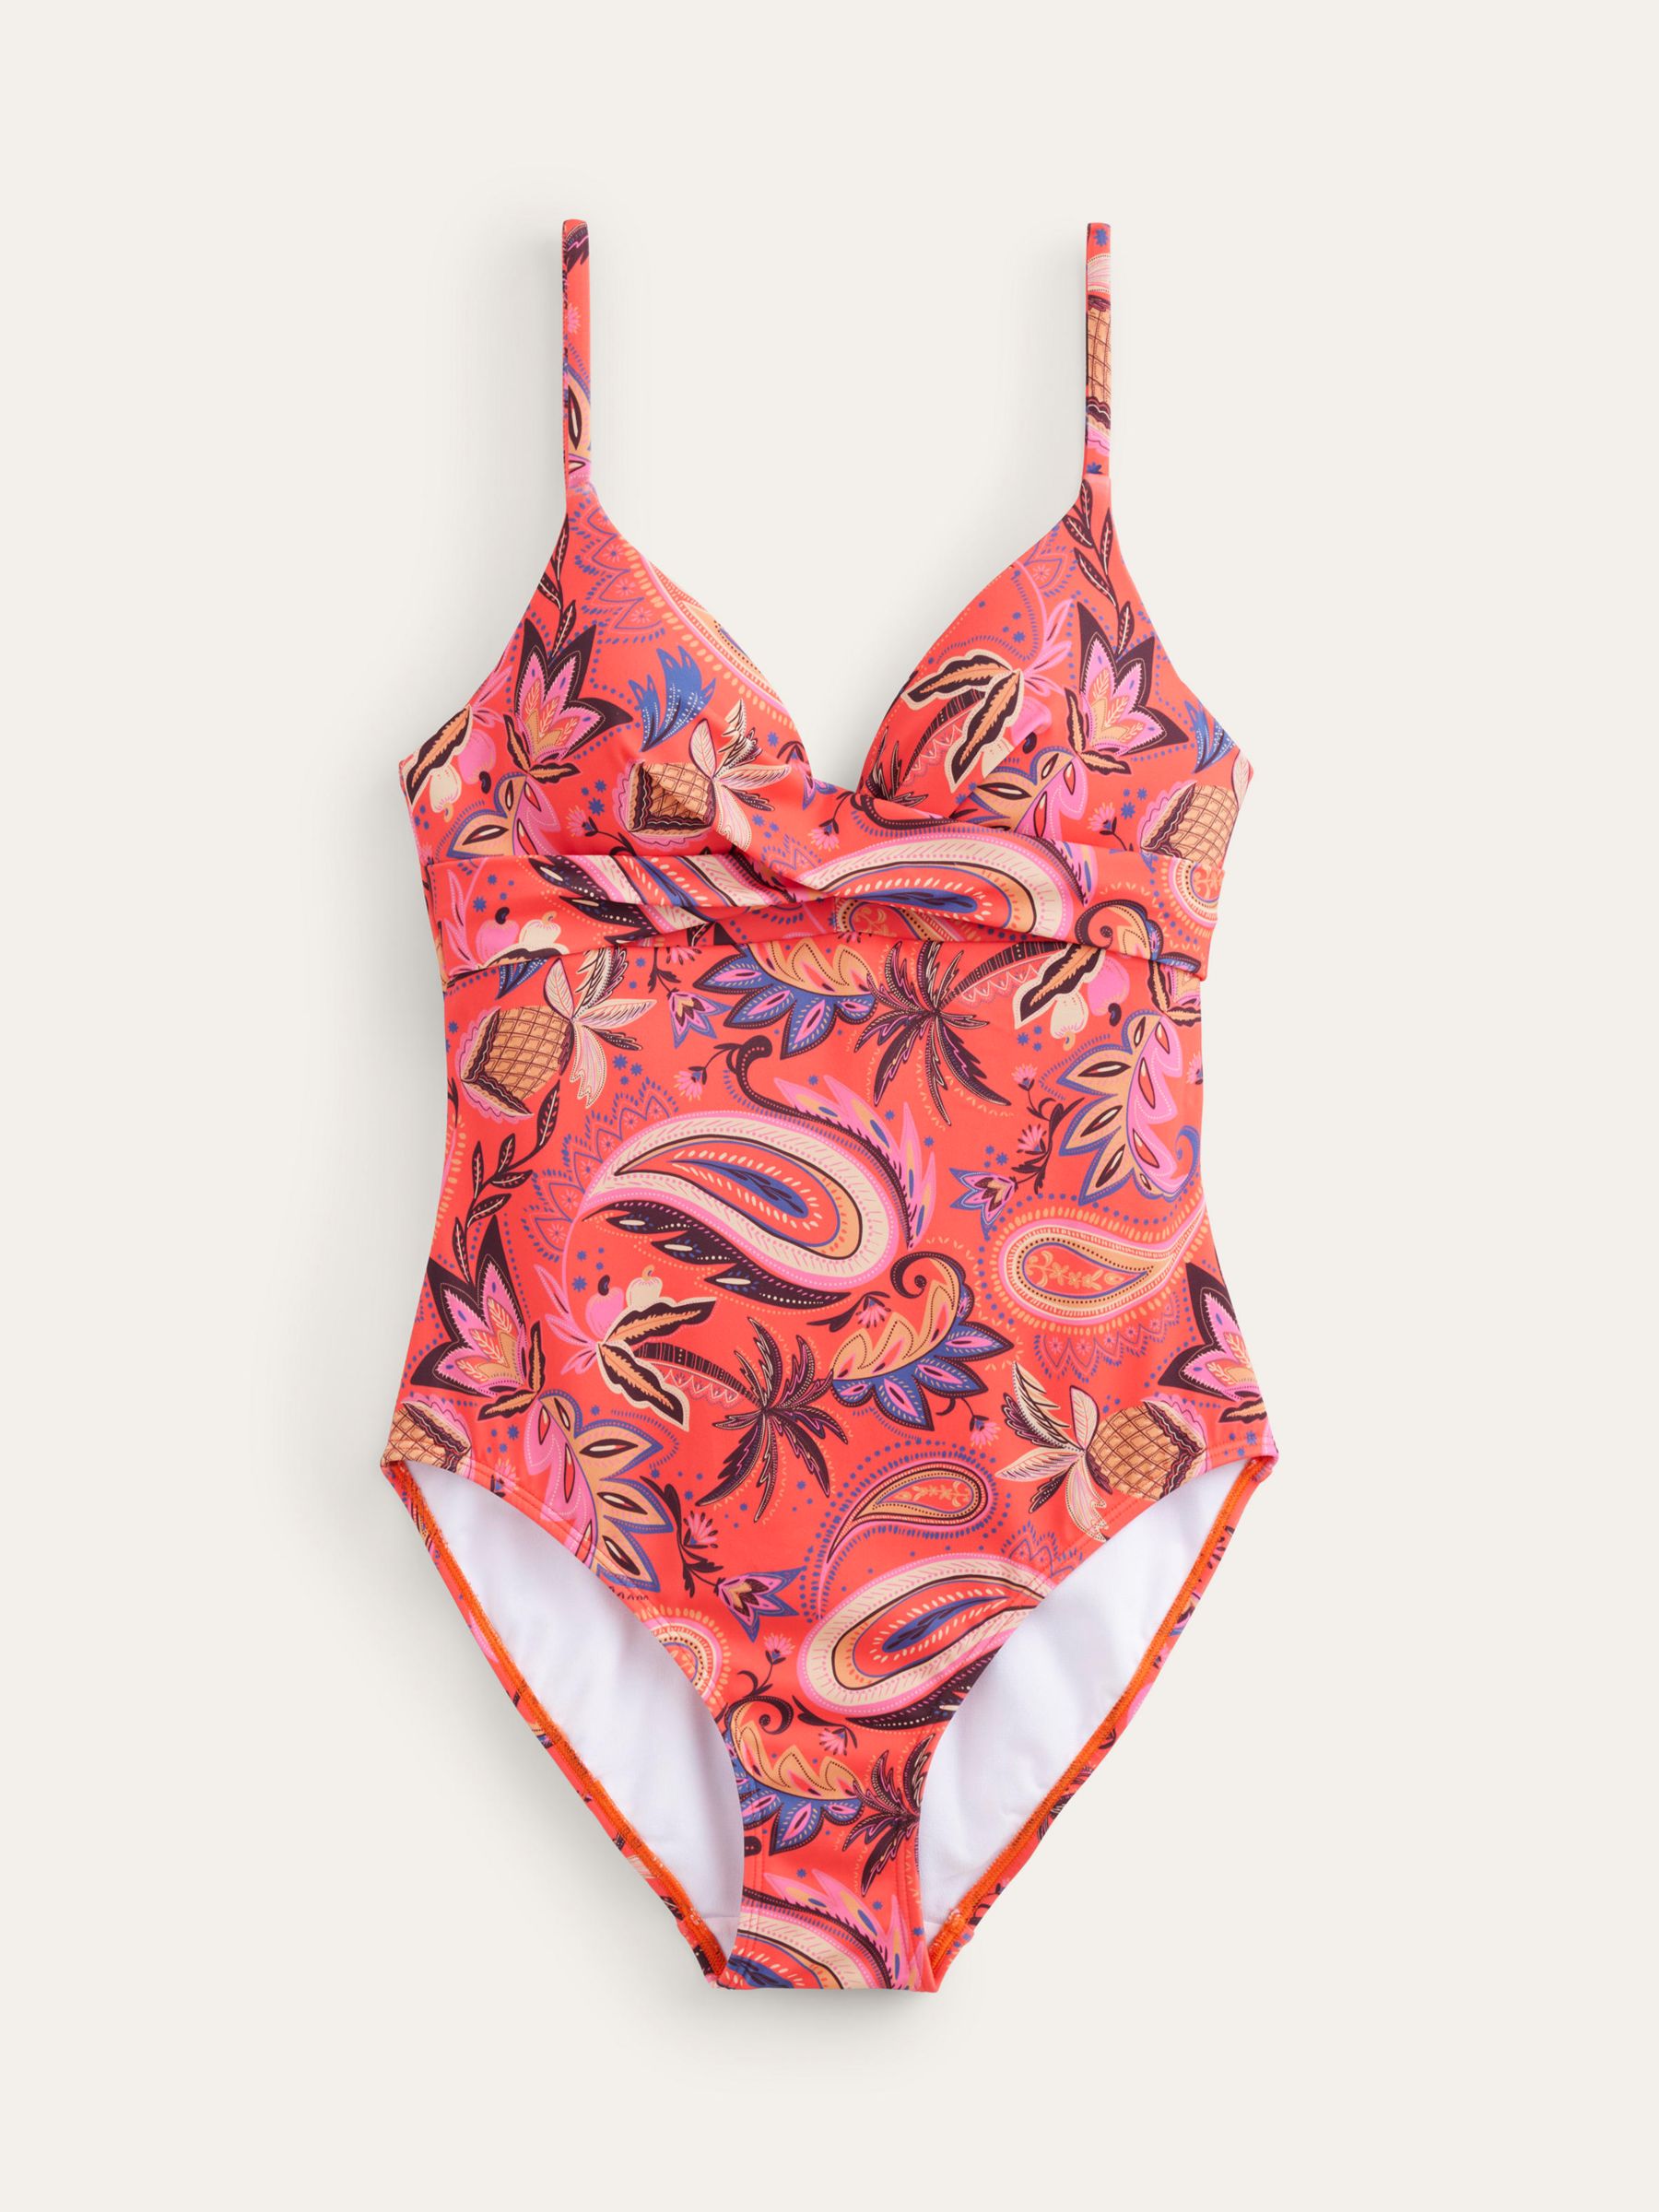 Boden Capri Paisley Print Swimsuit, Coral/Multi, 32B